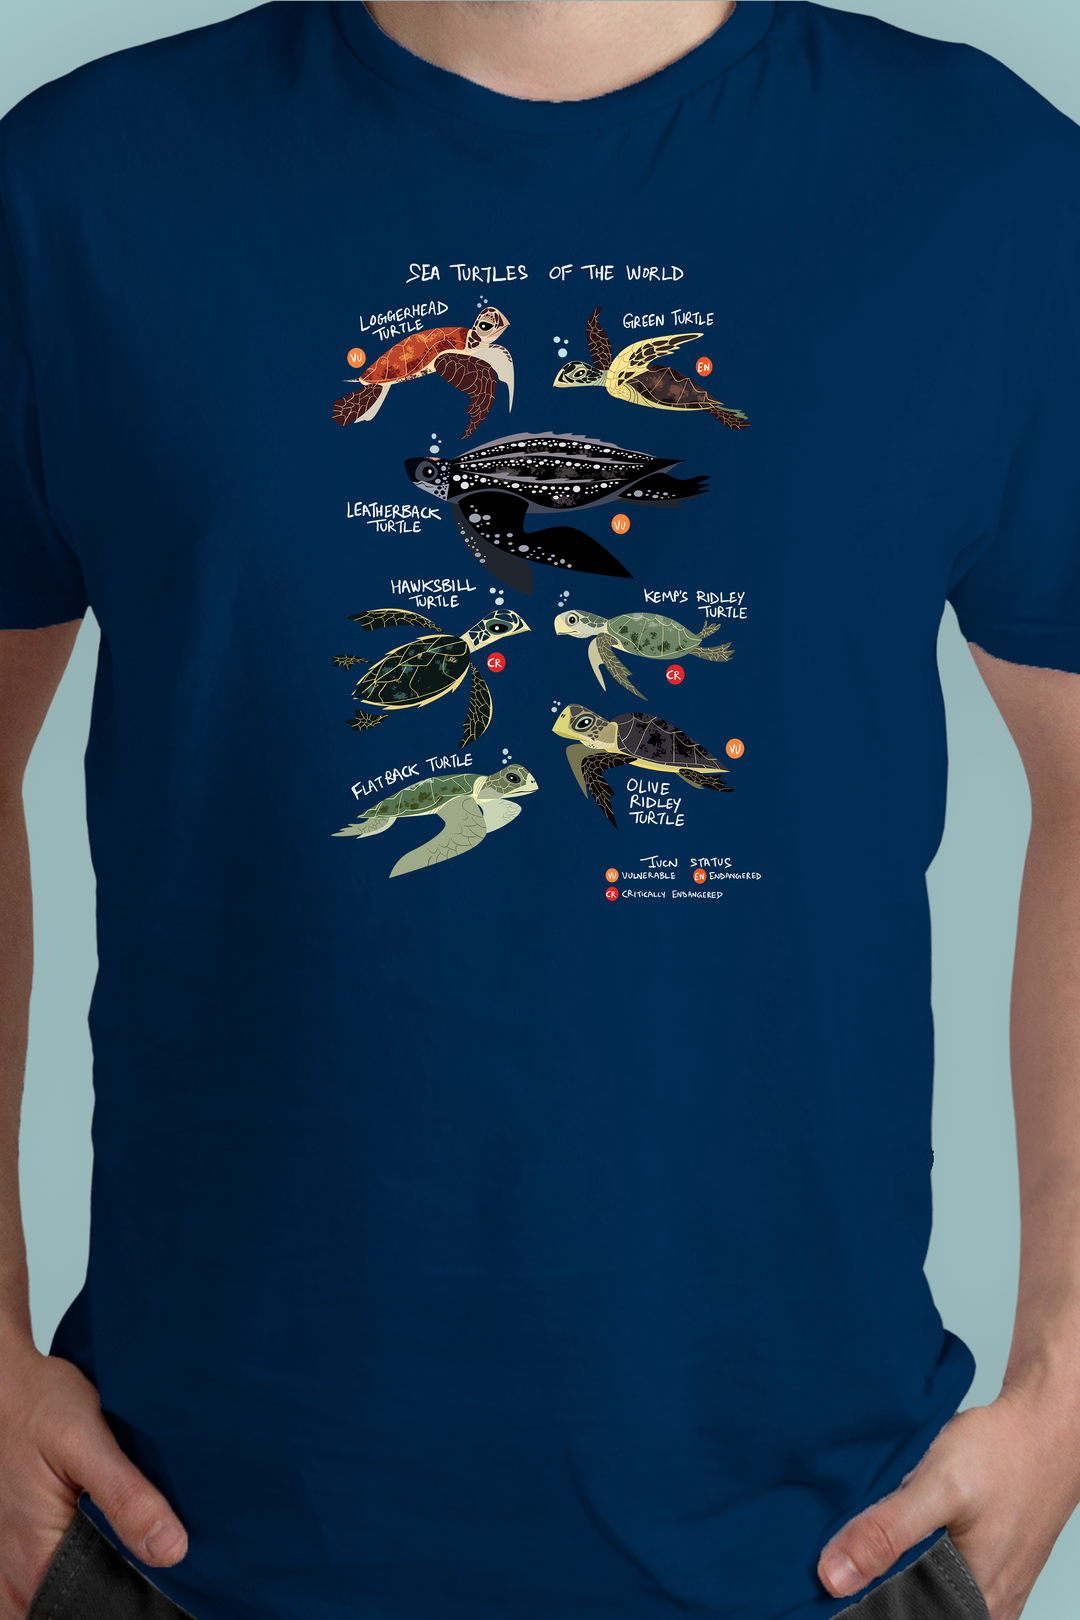 Sea Turtles of the World T-shirt